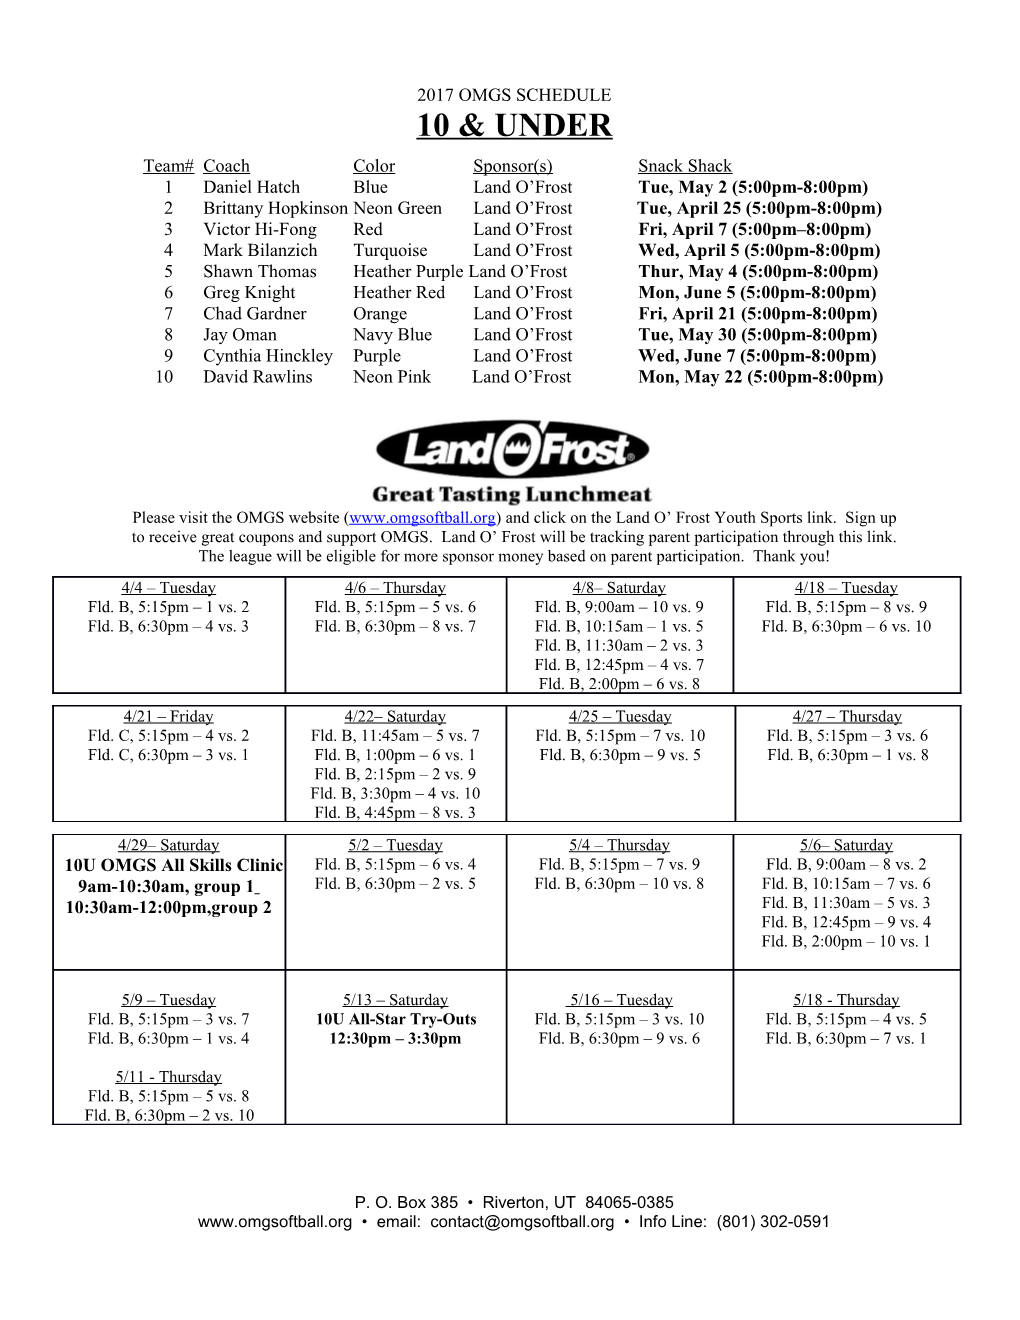 2004 OMGS Coach & Player Calendar / Information